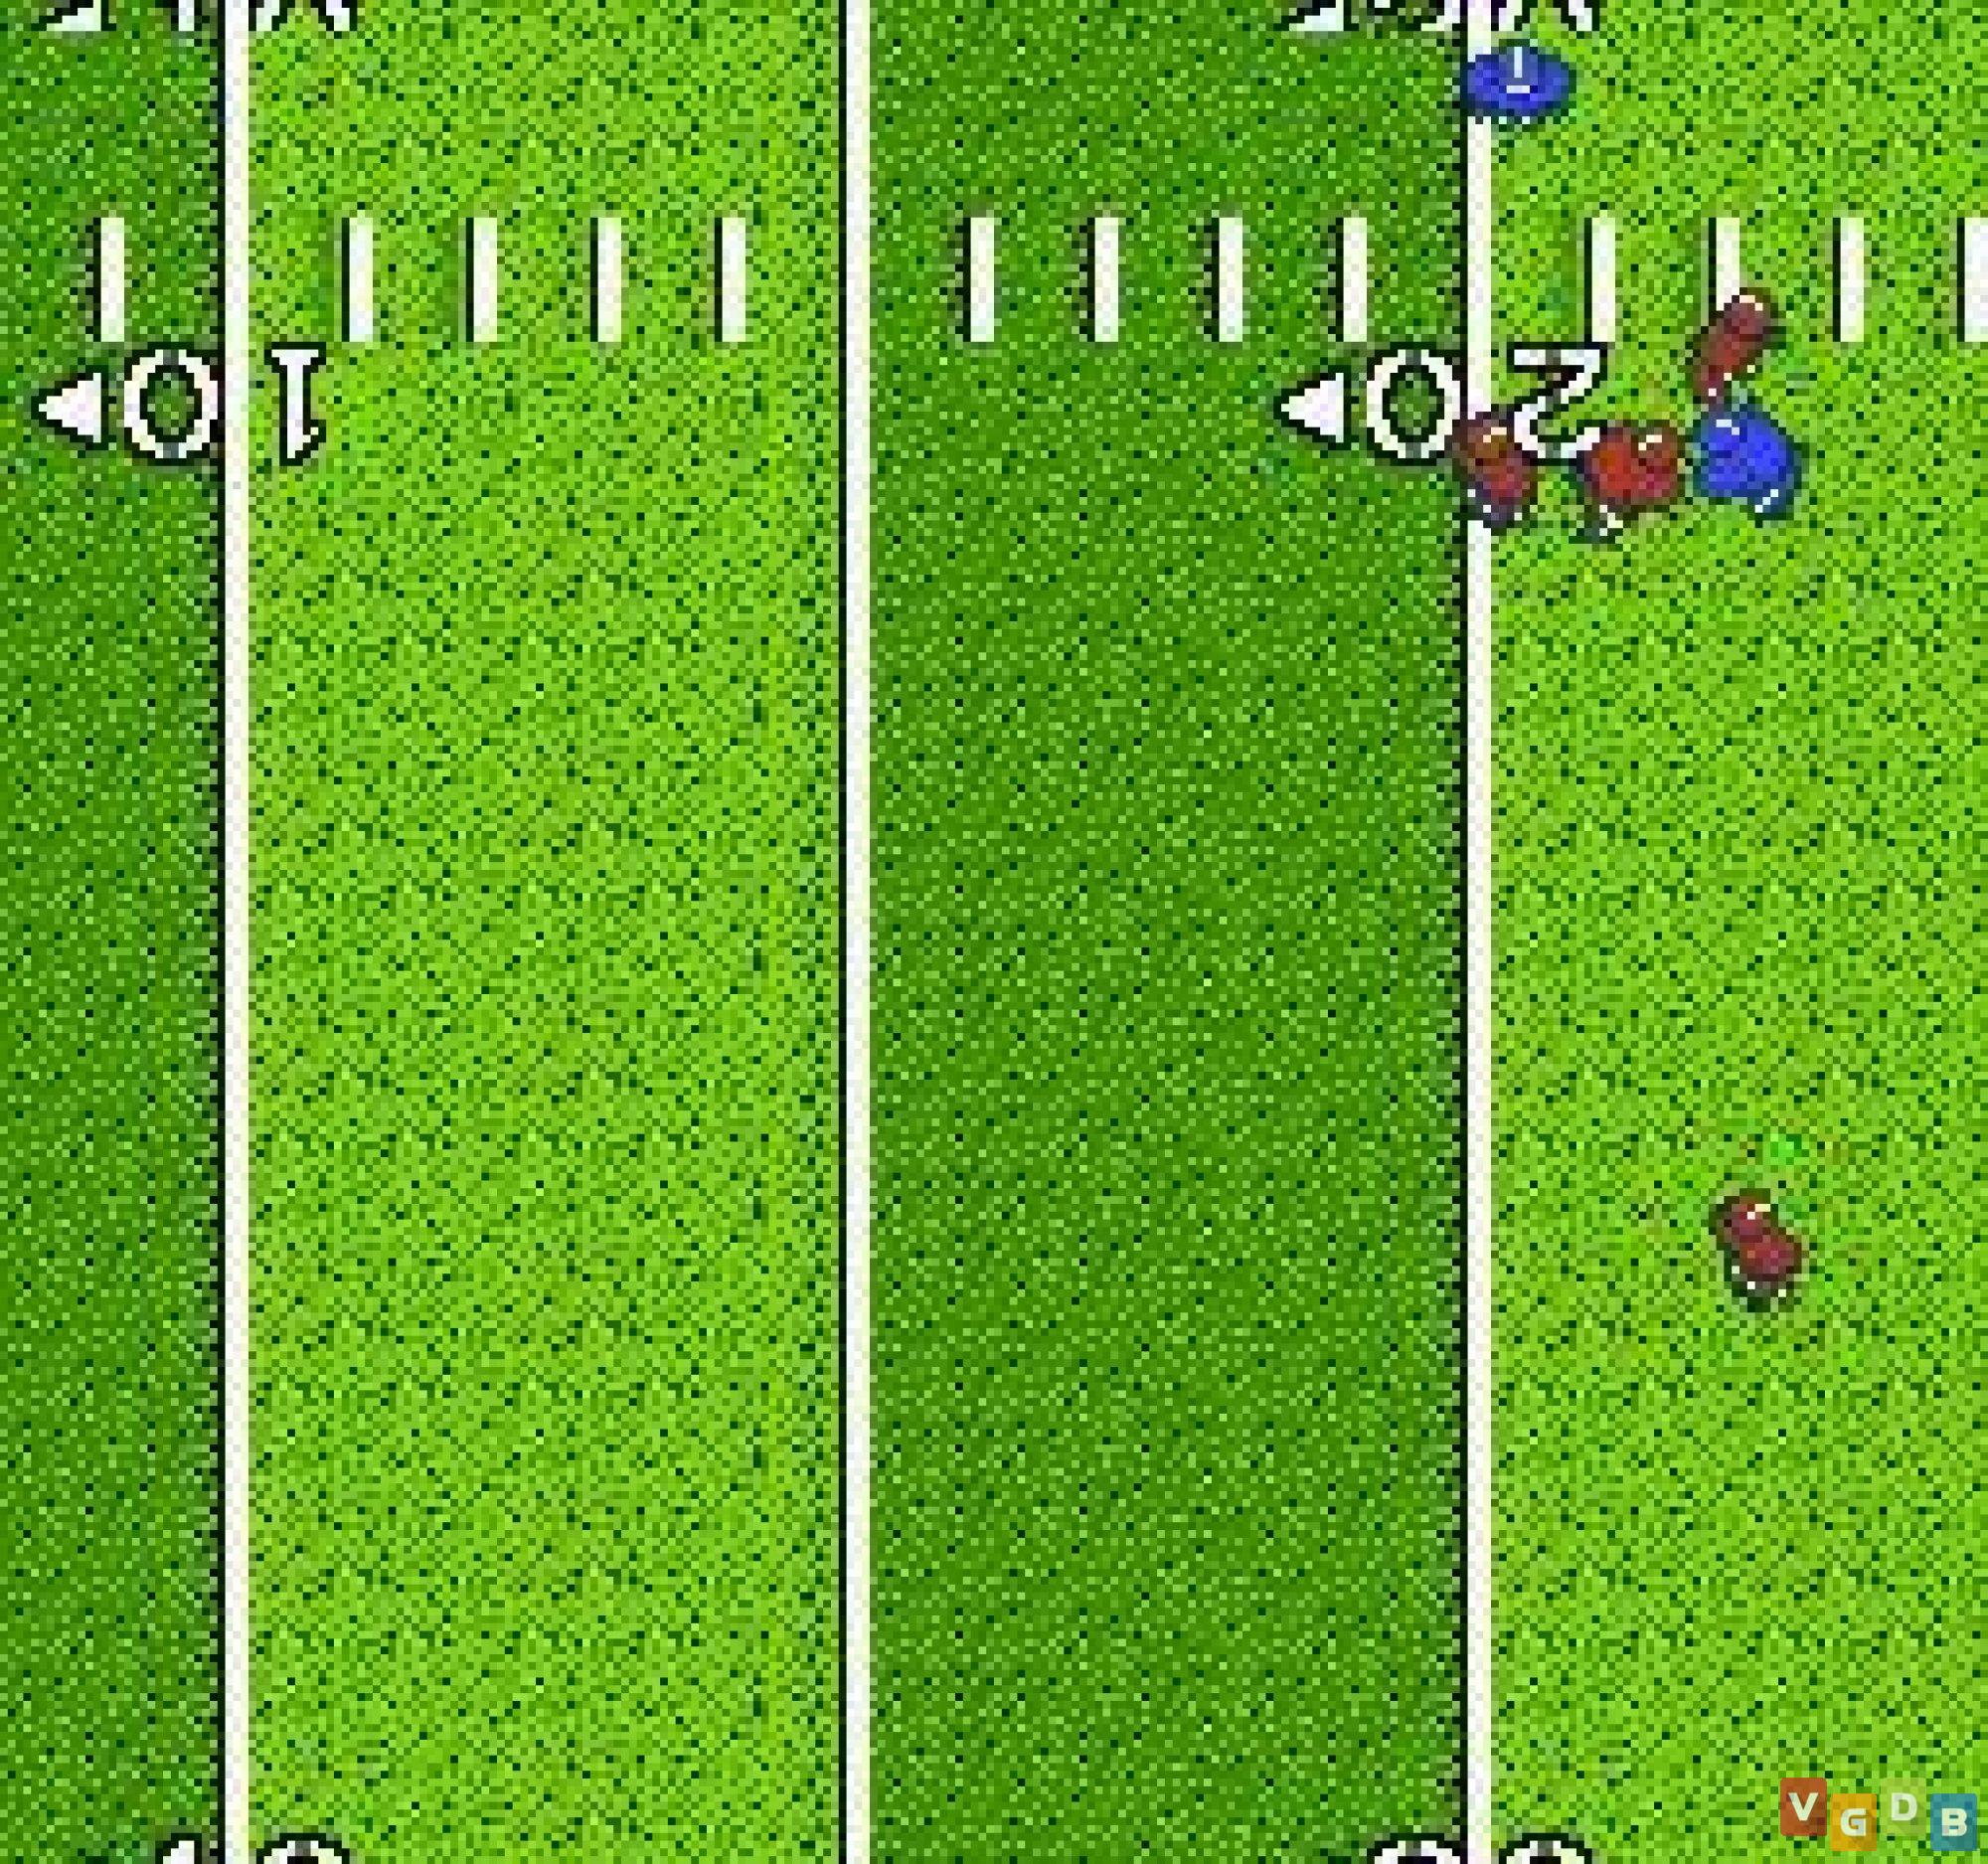 Quarter Back Scramble: American Football Game - VGDB - Vídeo Game Data Base